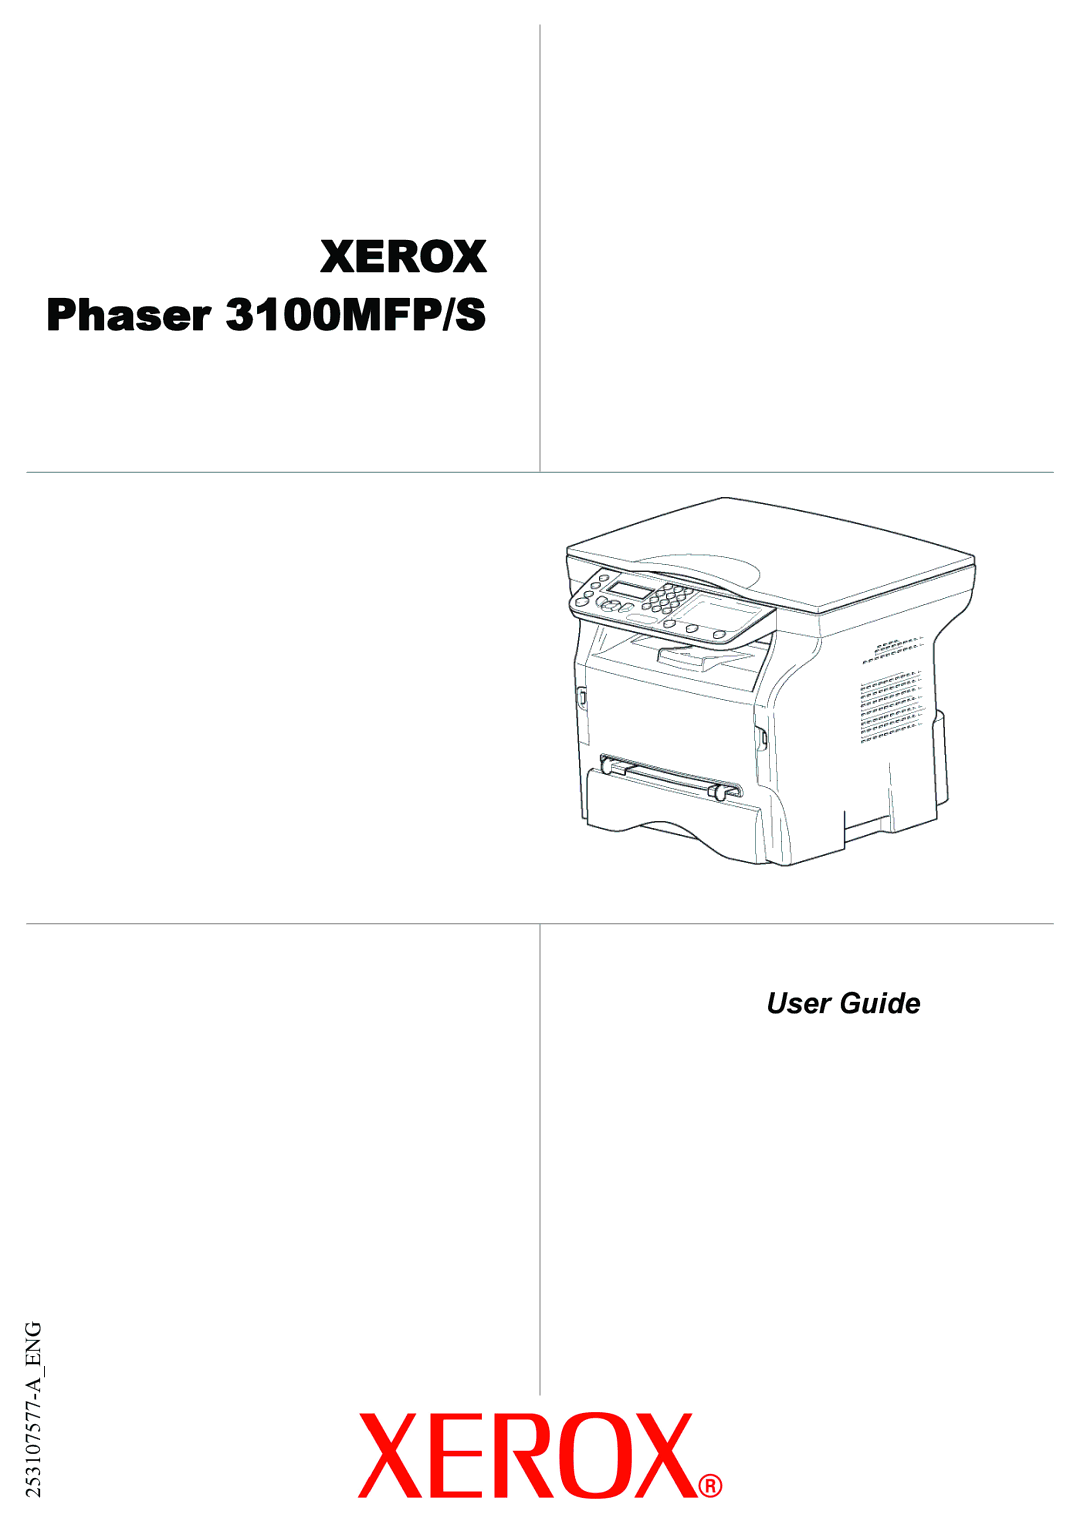 Xerox manual Xerox Phaser 3100MFP/S 